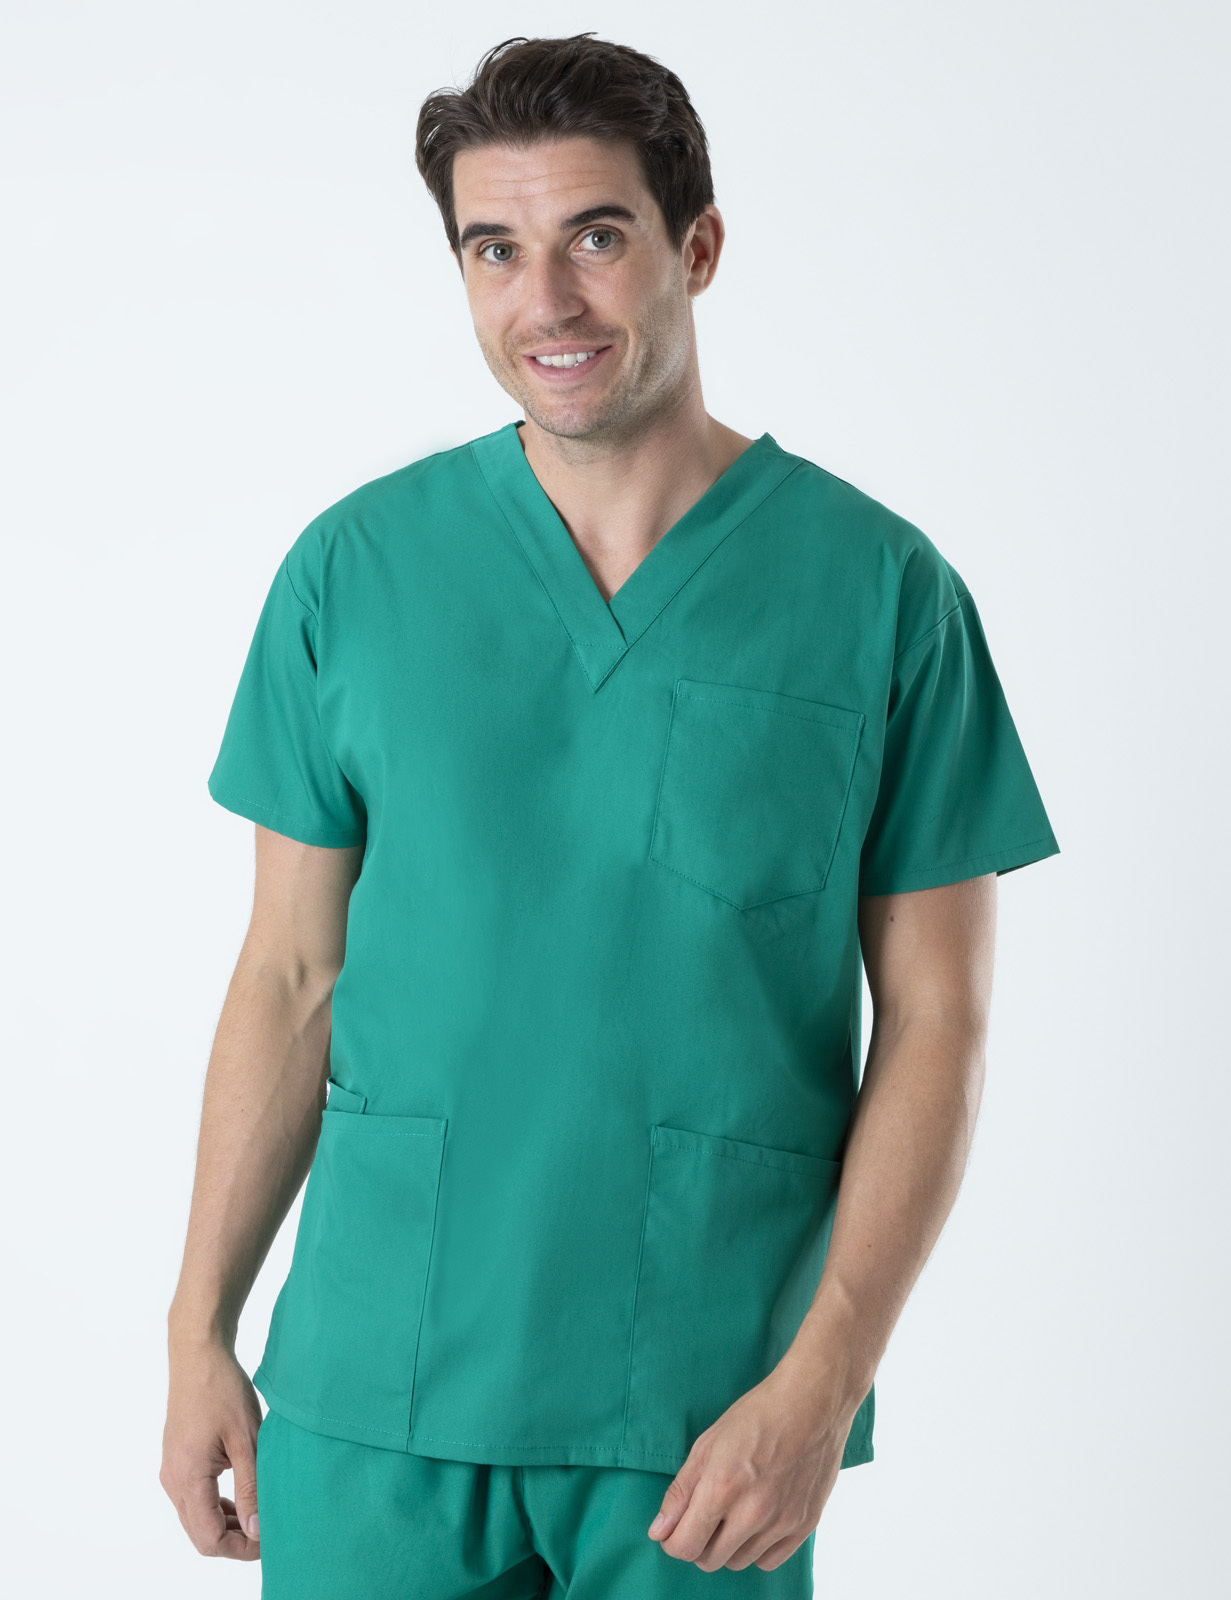 Darwin Hospital - ED Doctor (4 Pocket Scrub Top and Cargo Pants in Hunter incl Logos)